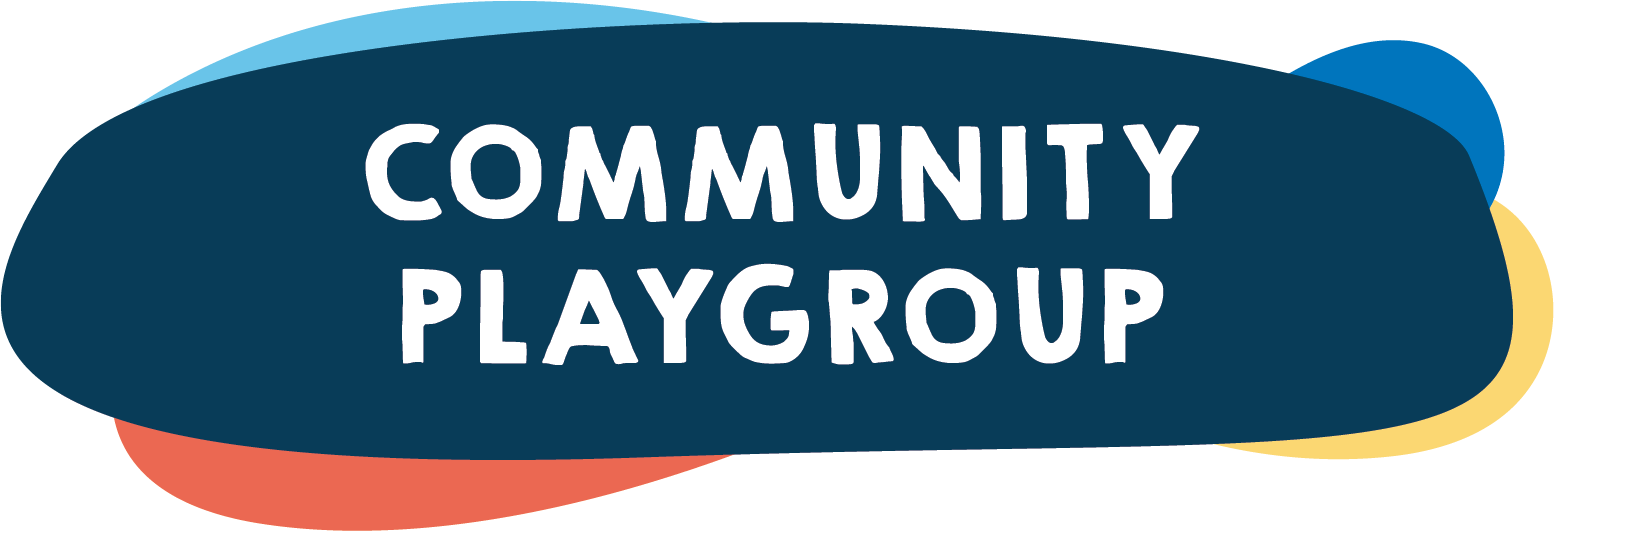 Community Hub, community playgroup